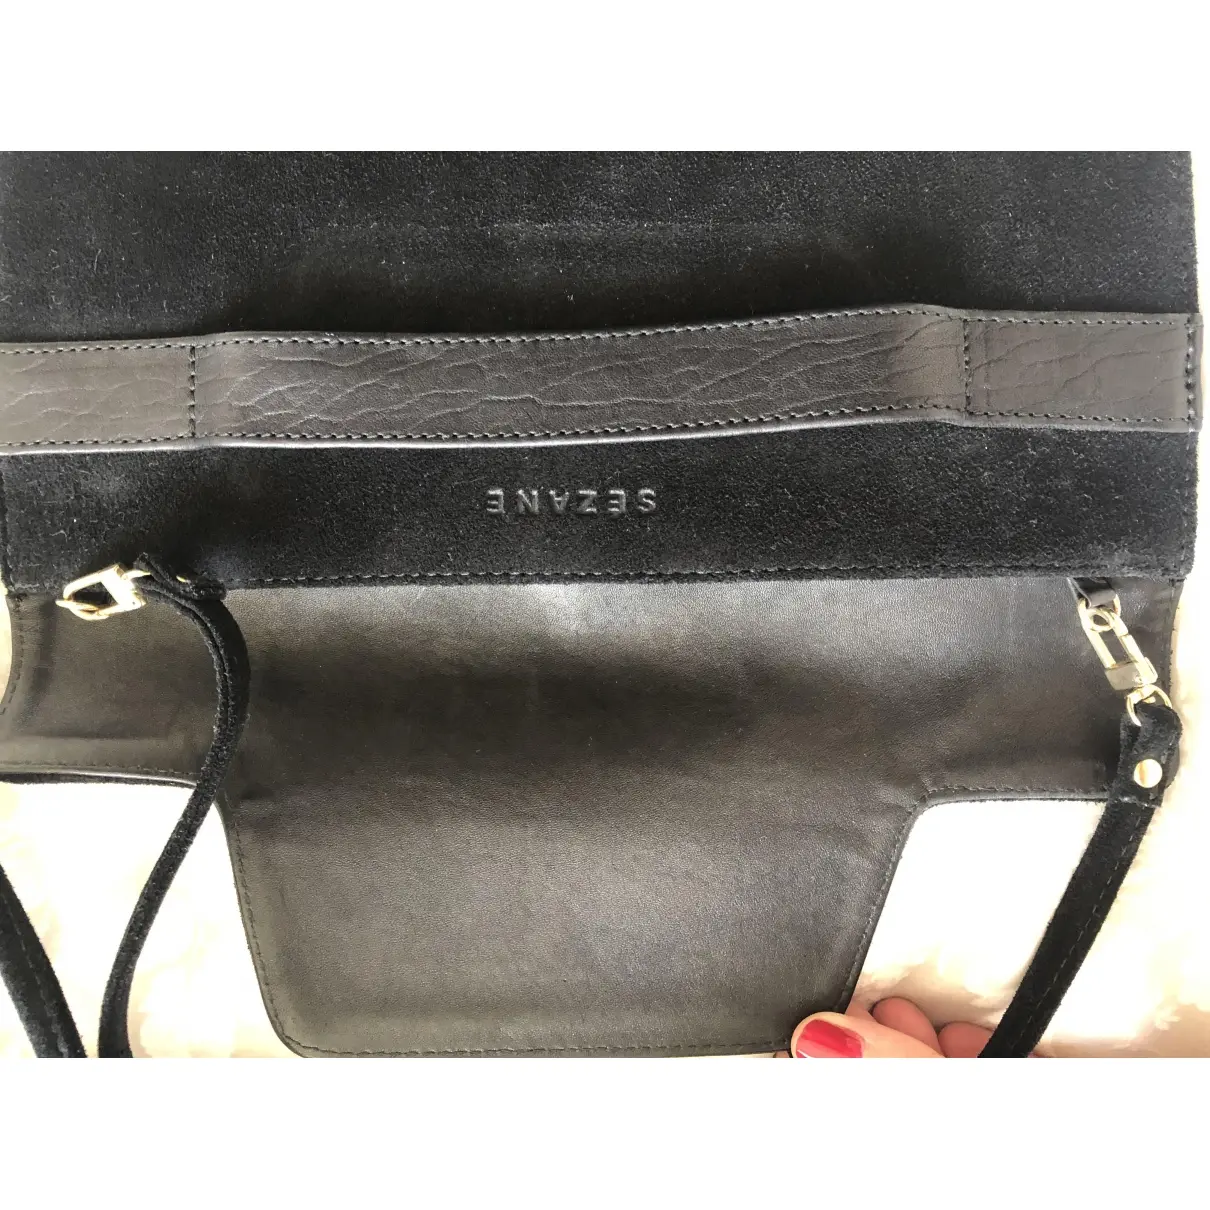 Buy Sézane Handbag online